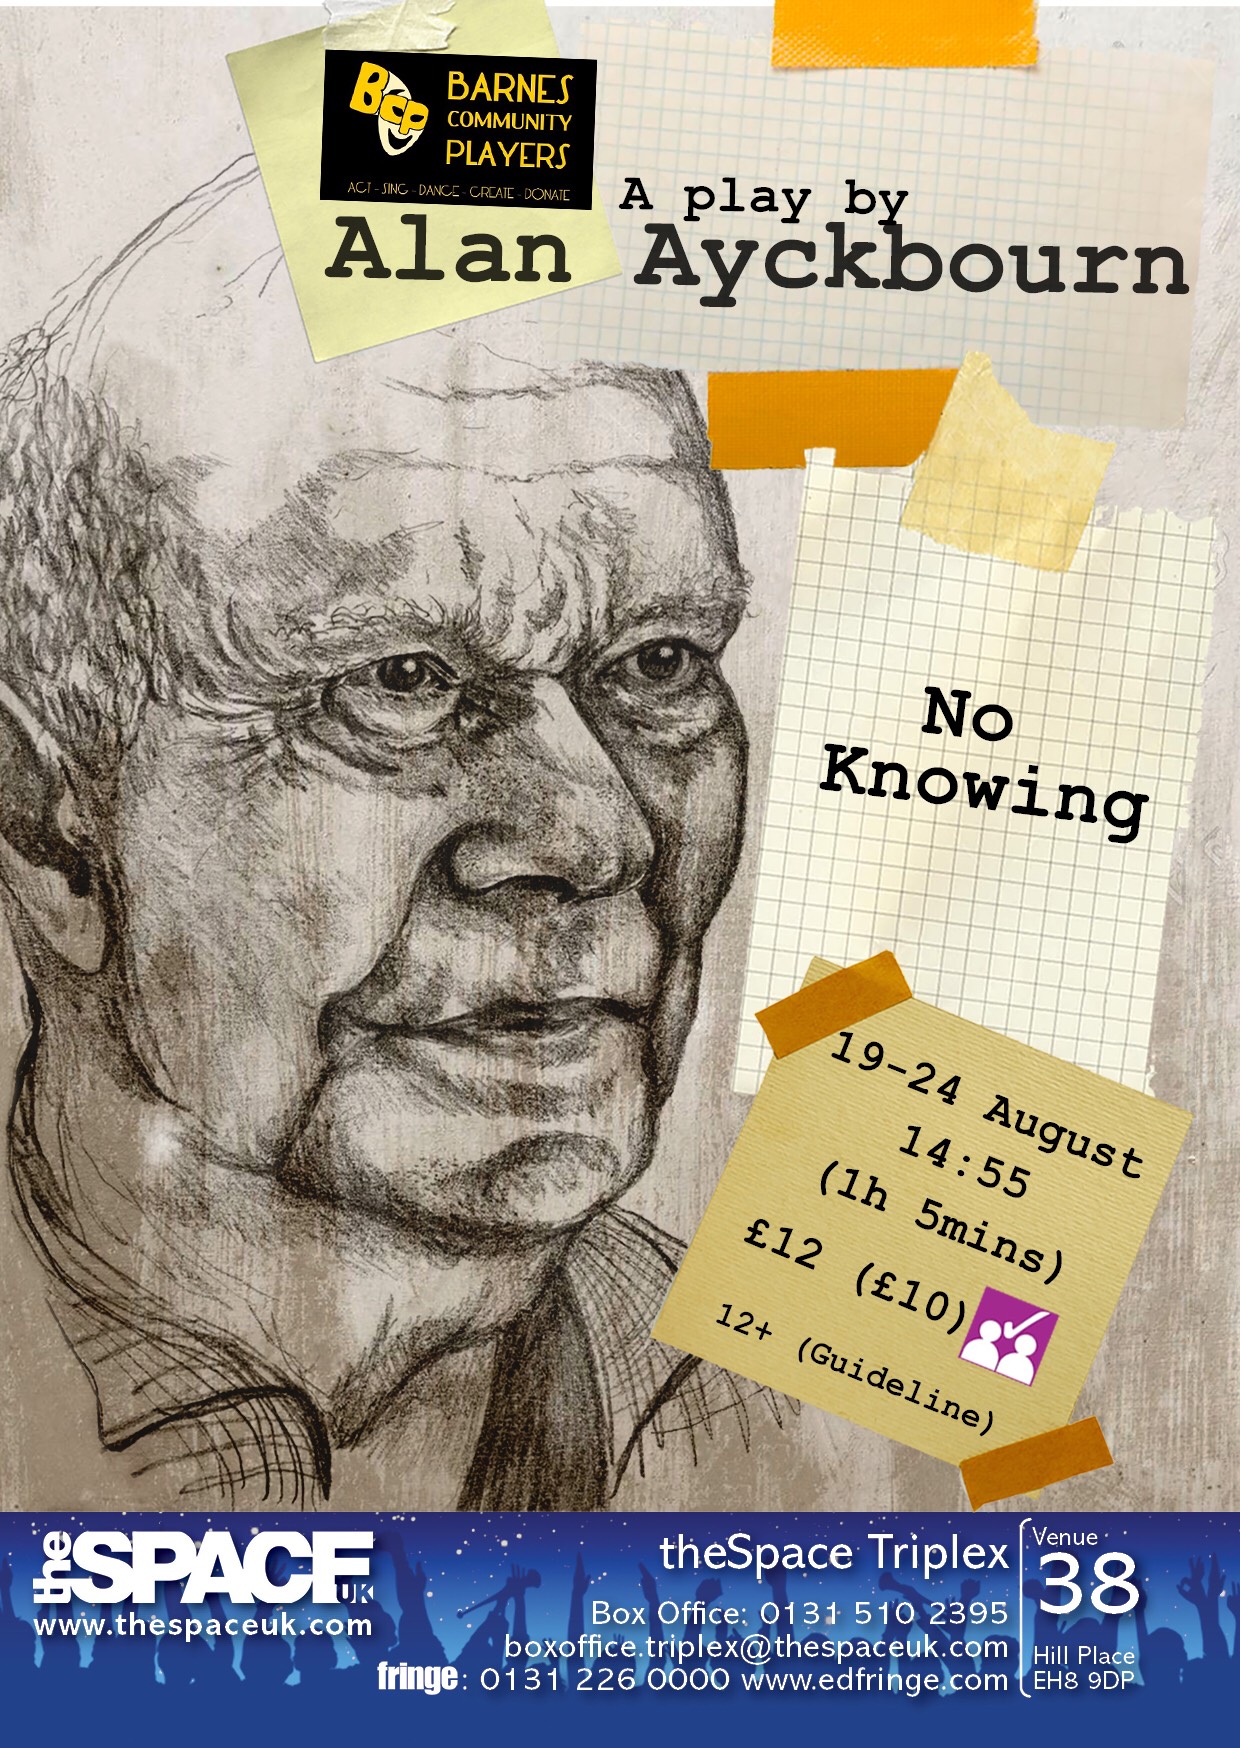 English solicitor to star in Sir Alan Ayckbourn play at Fringe